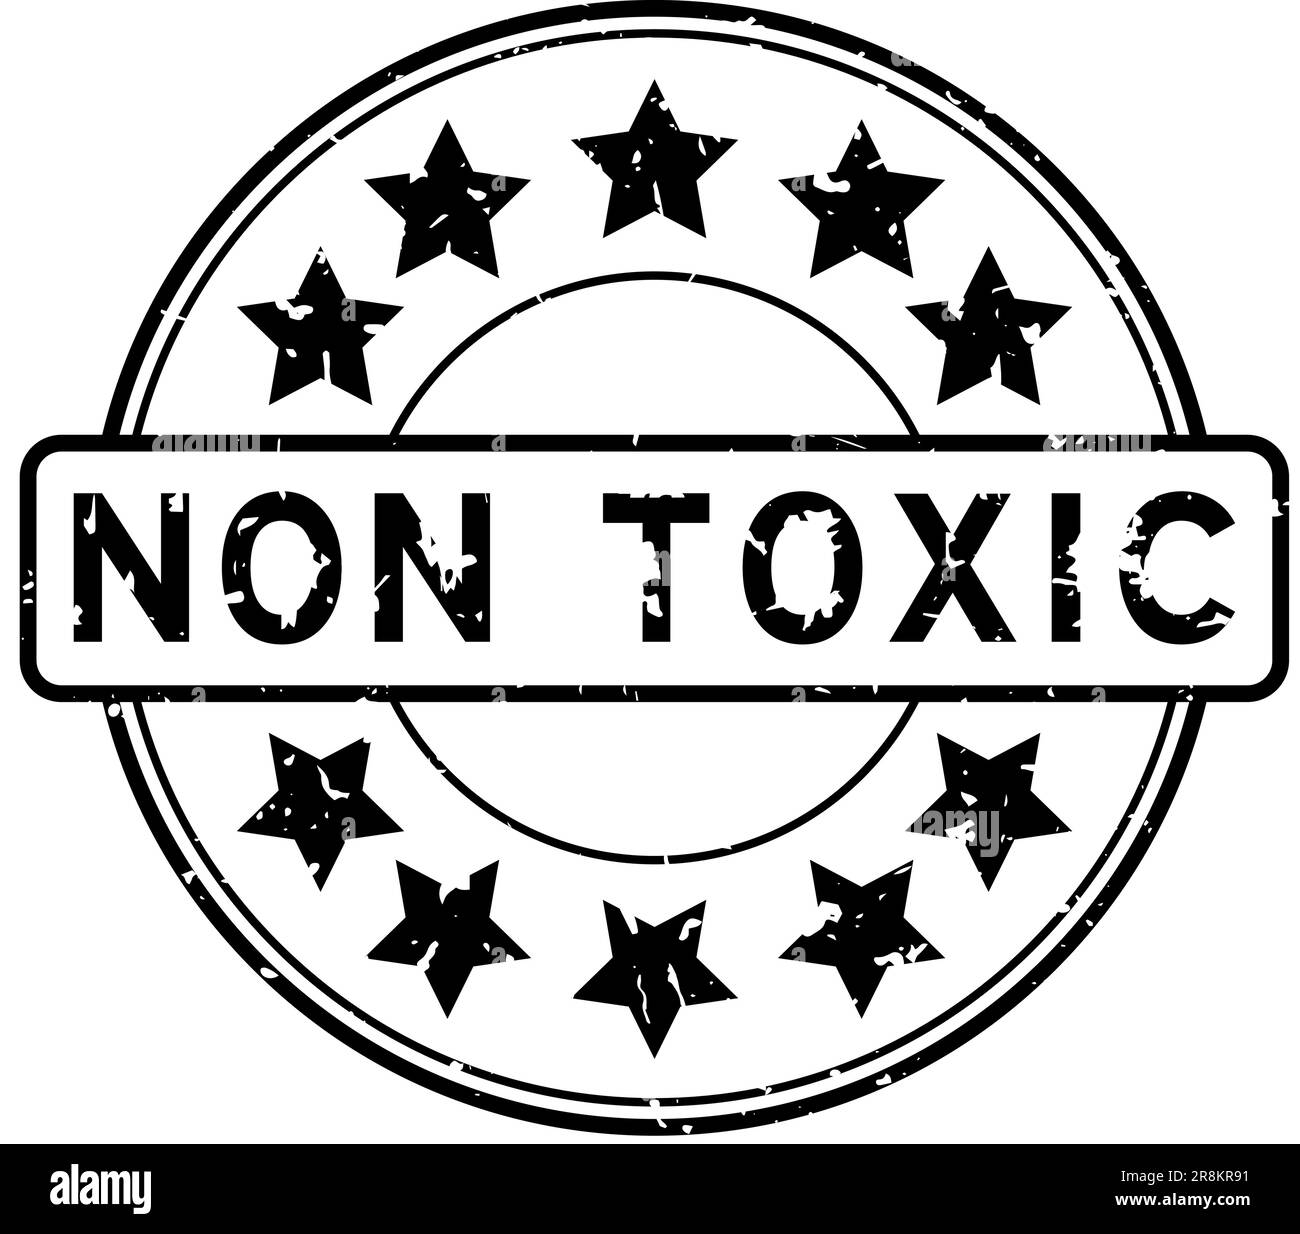 Non toxic round grunge black stamp Royalty Free Vector Image